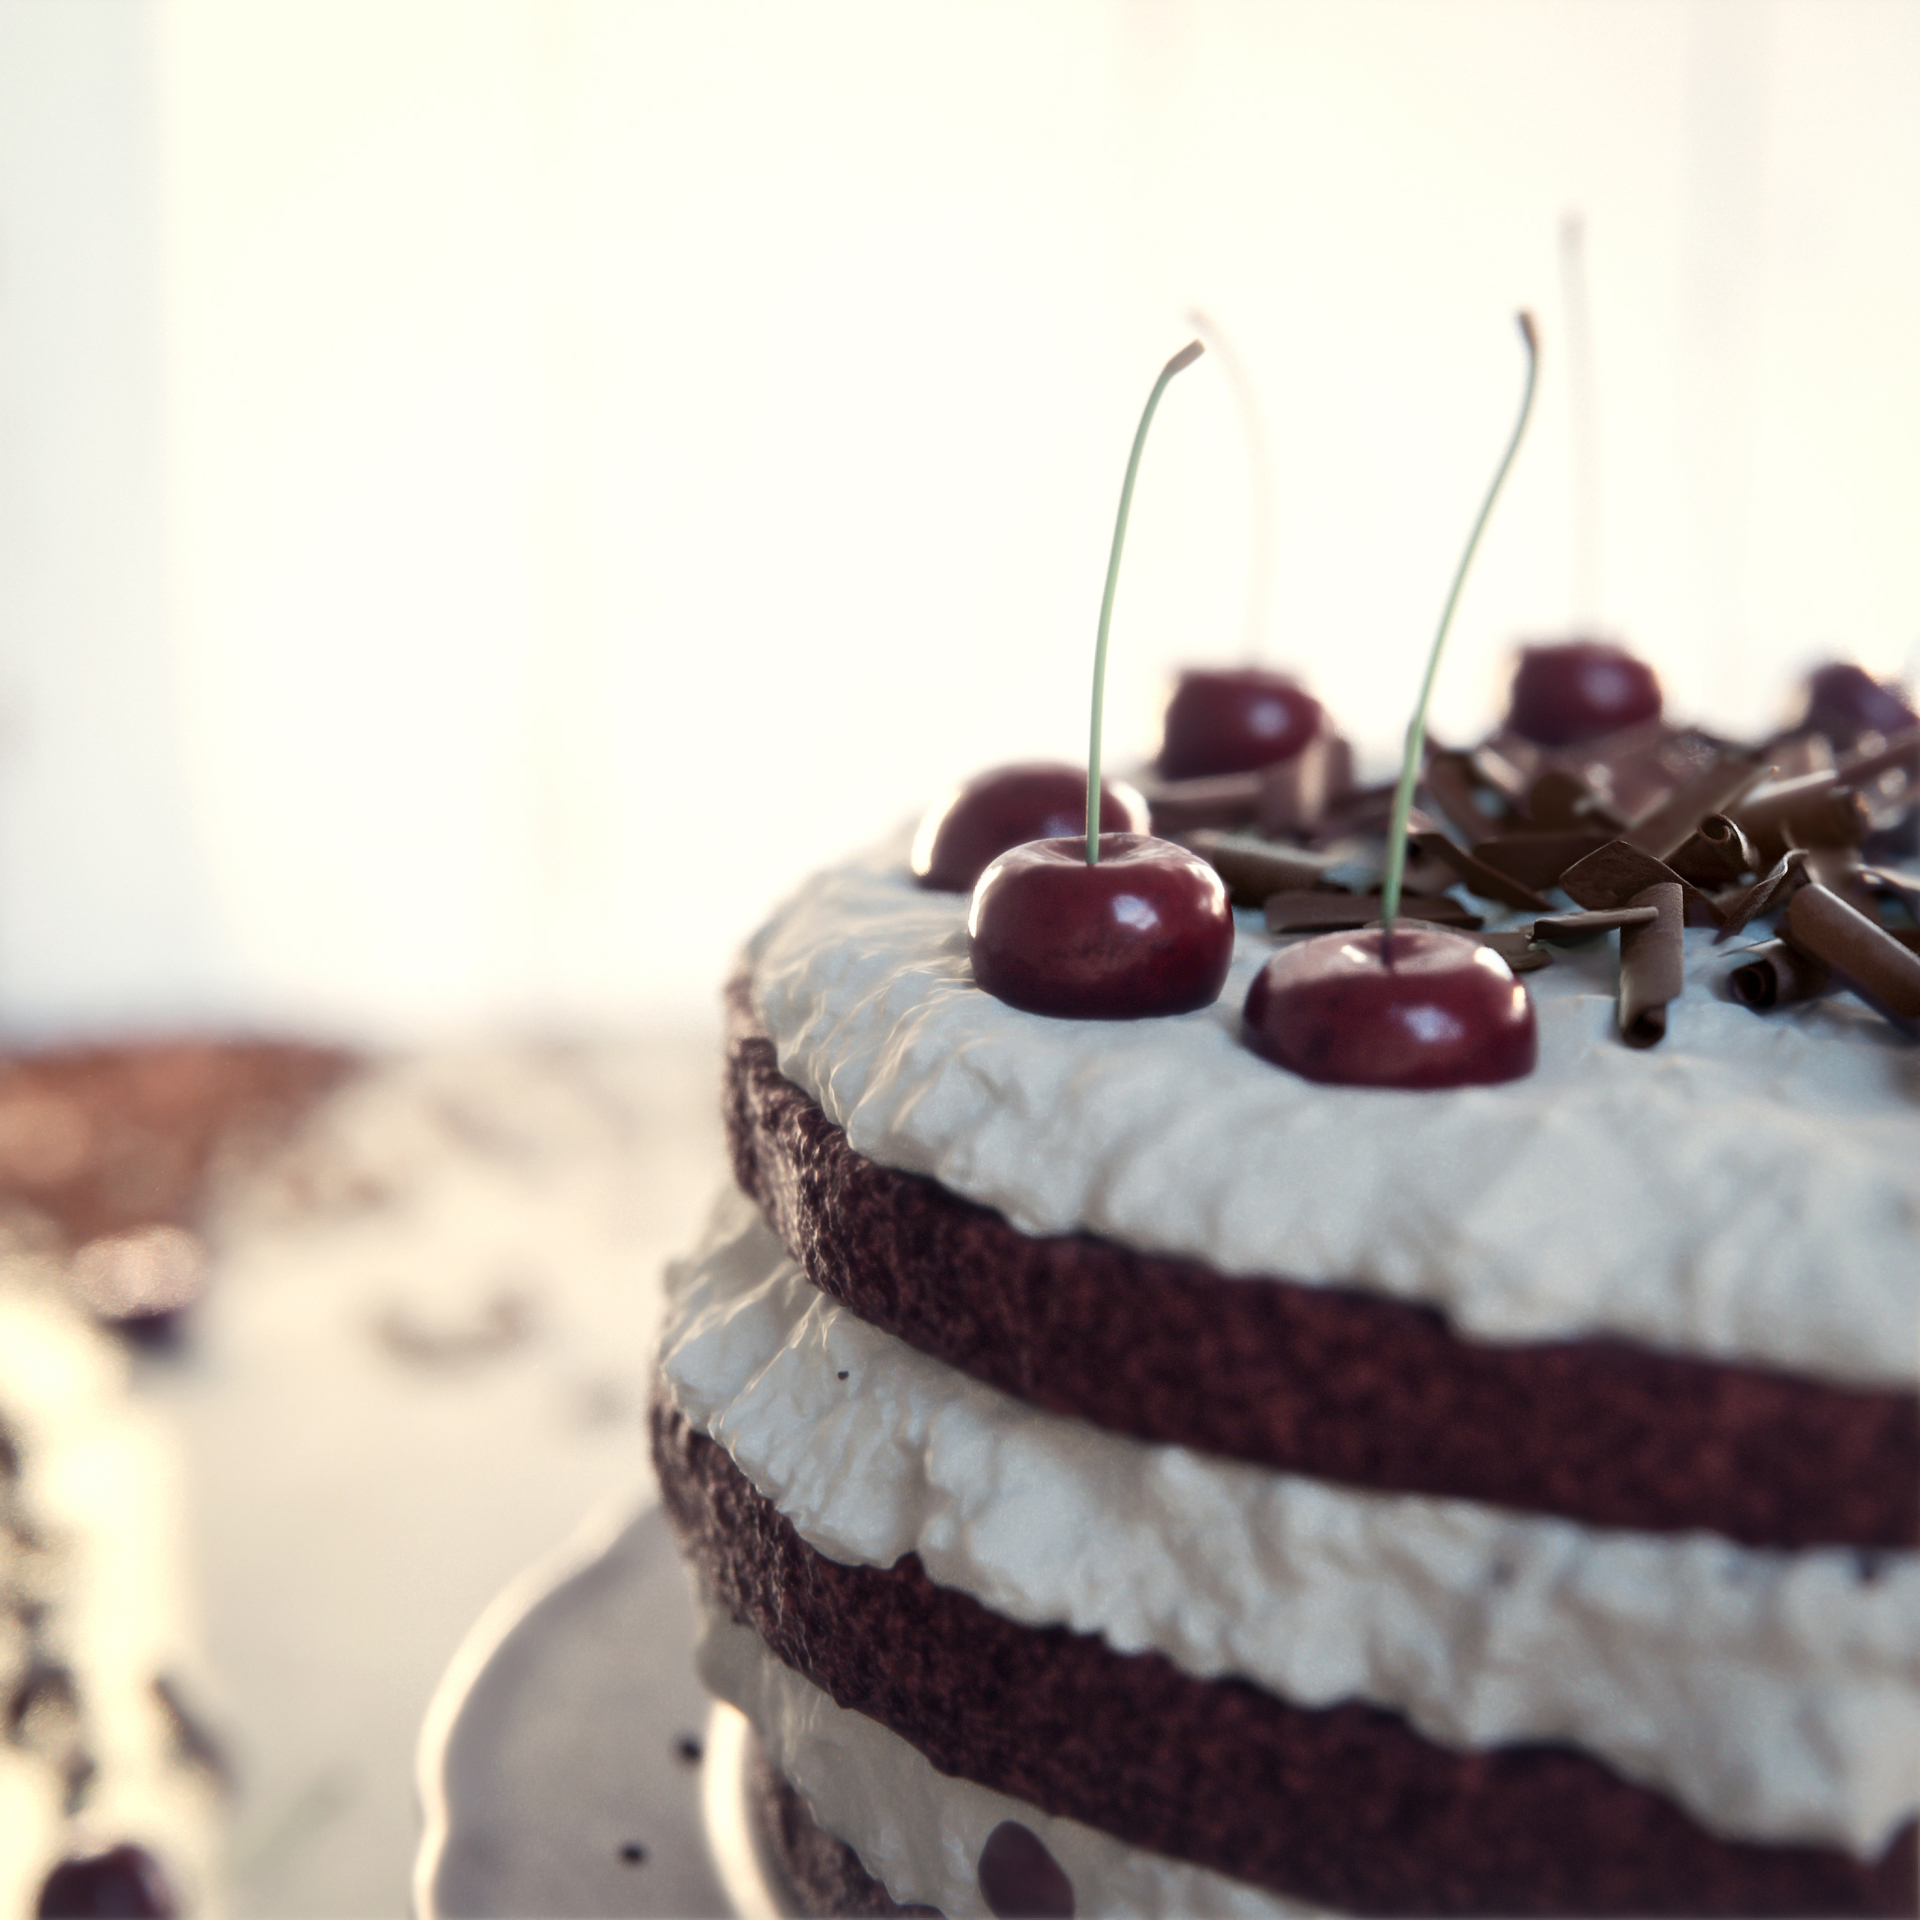 d photoshop mudbox maya vray Black Forest Cherry Cake cgmarlis